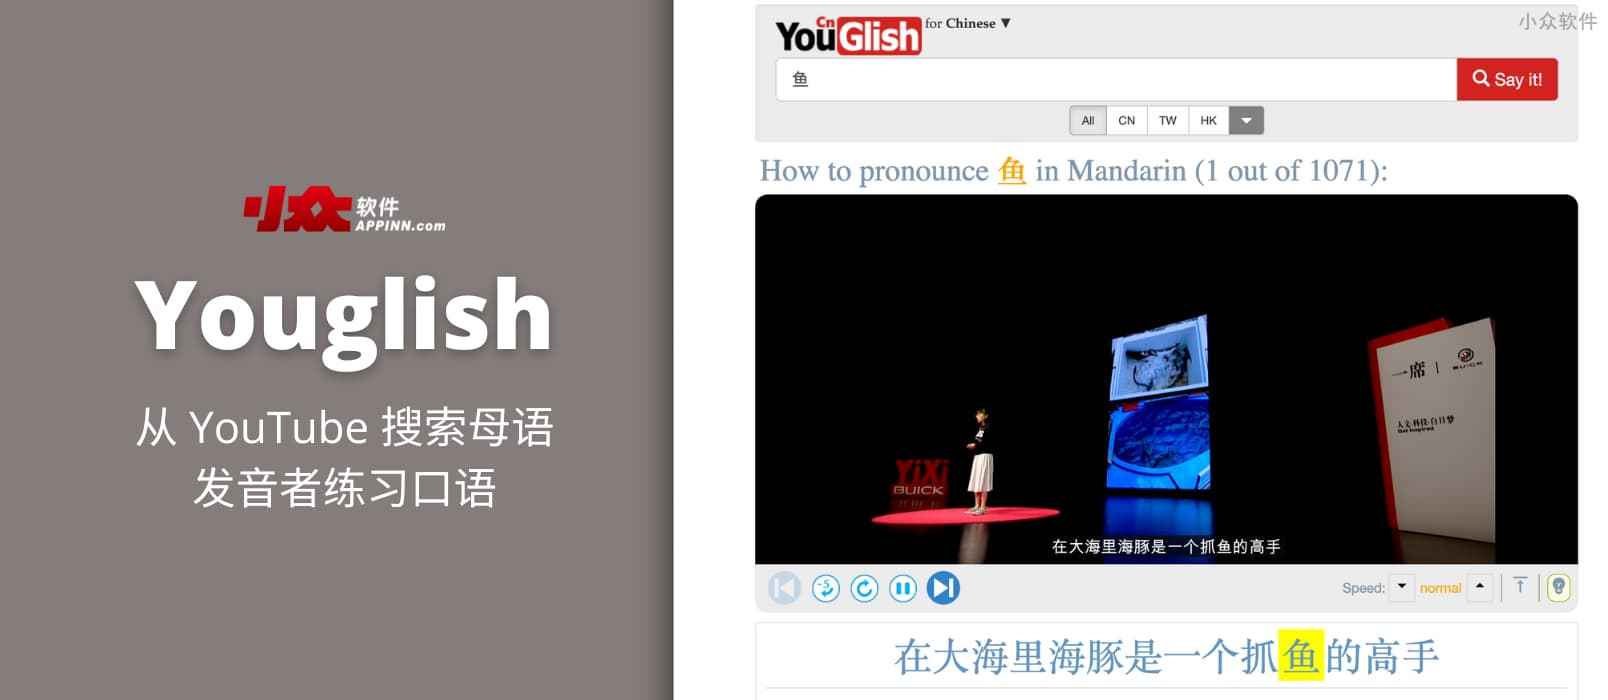 Youglish – 从 YouTube 搜索母语发音者，练习口语，支持英文、中文、手语在内的 18 种语言